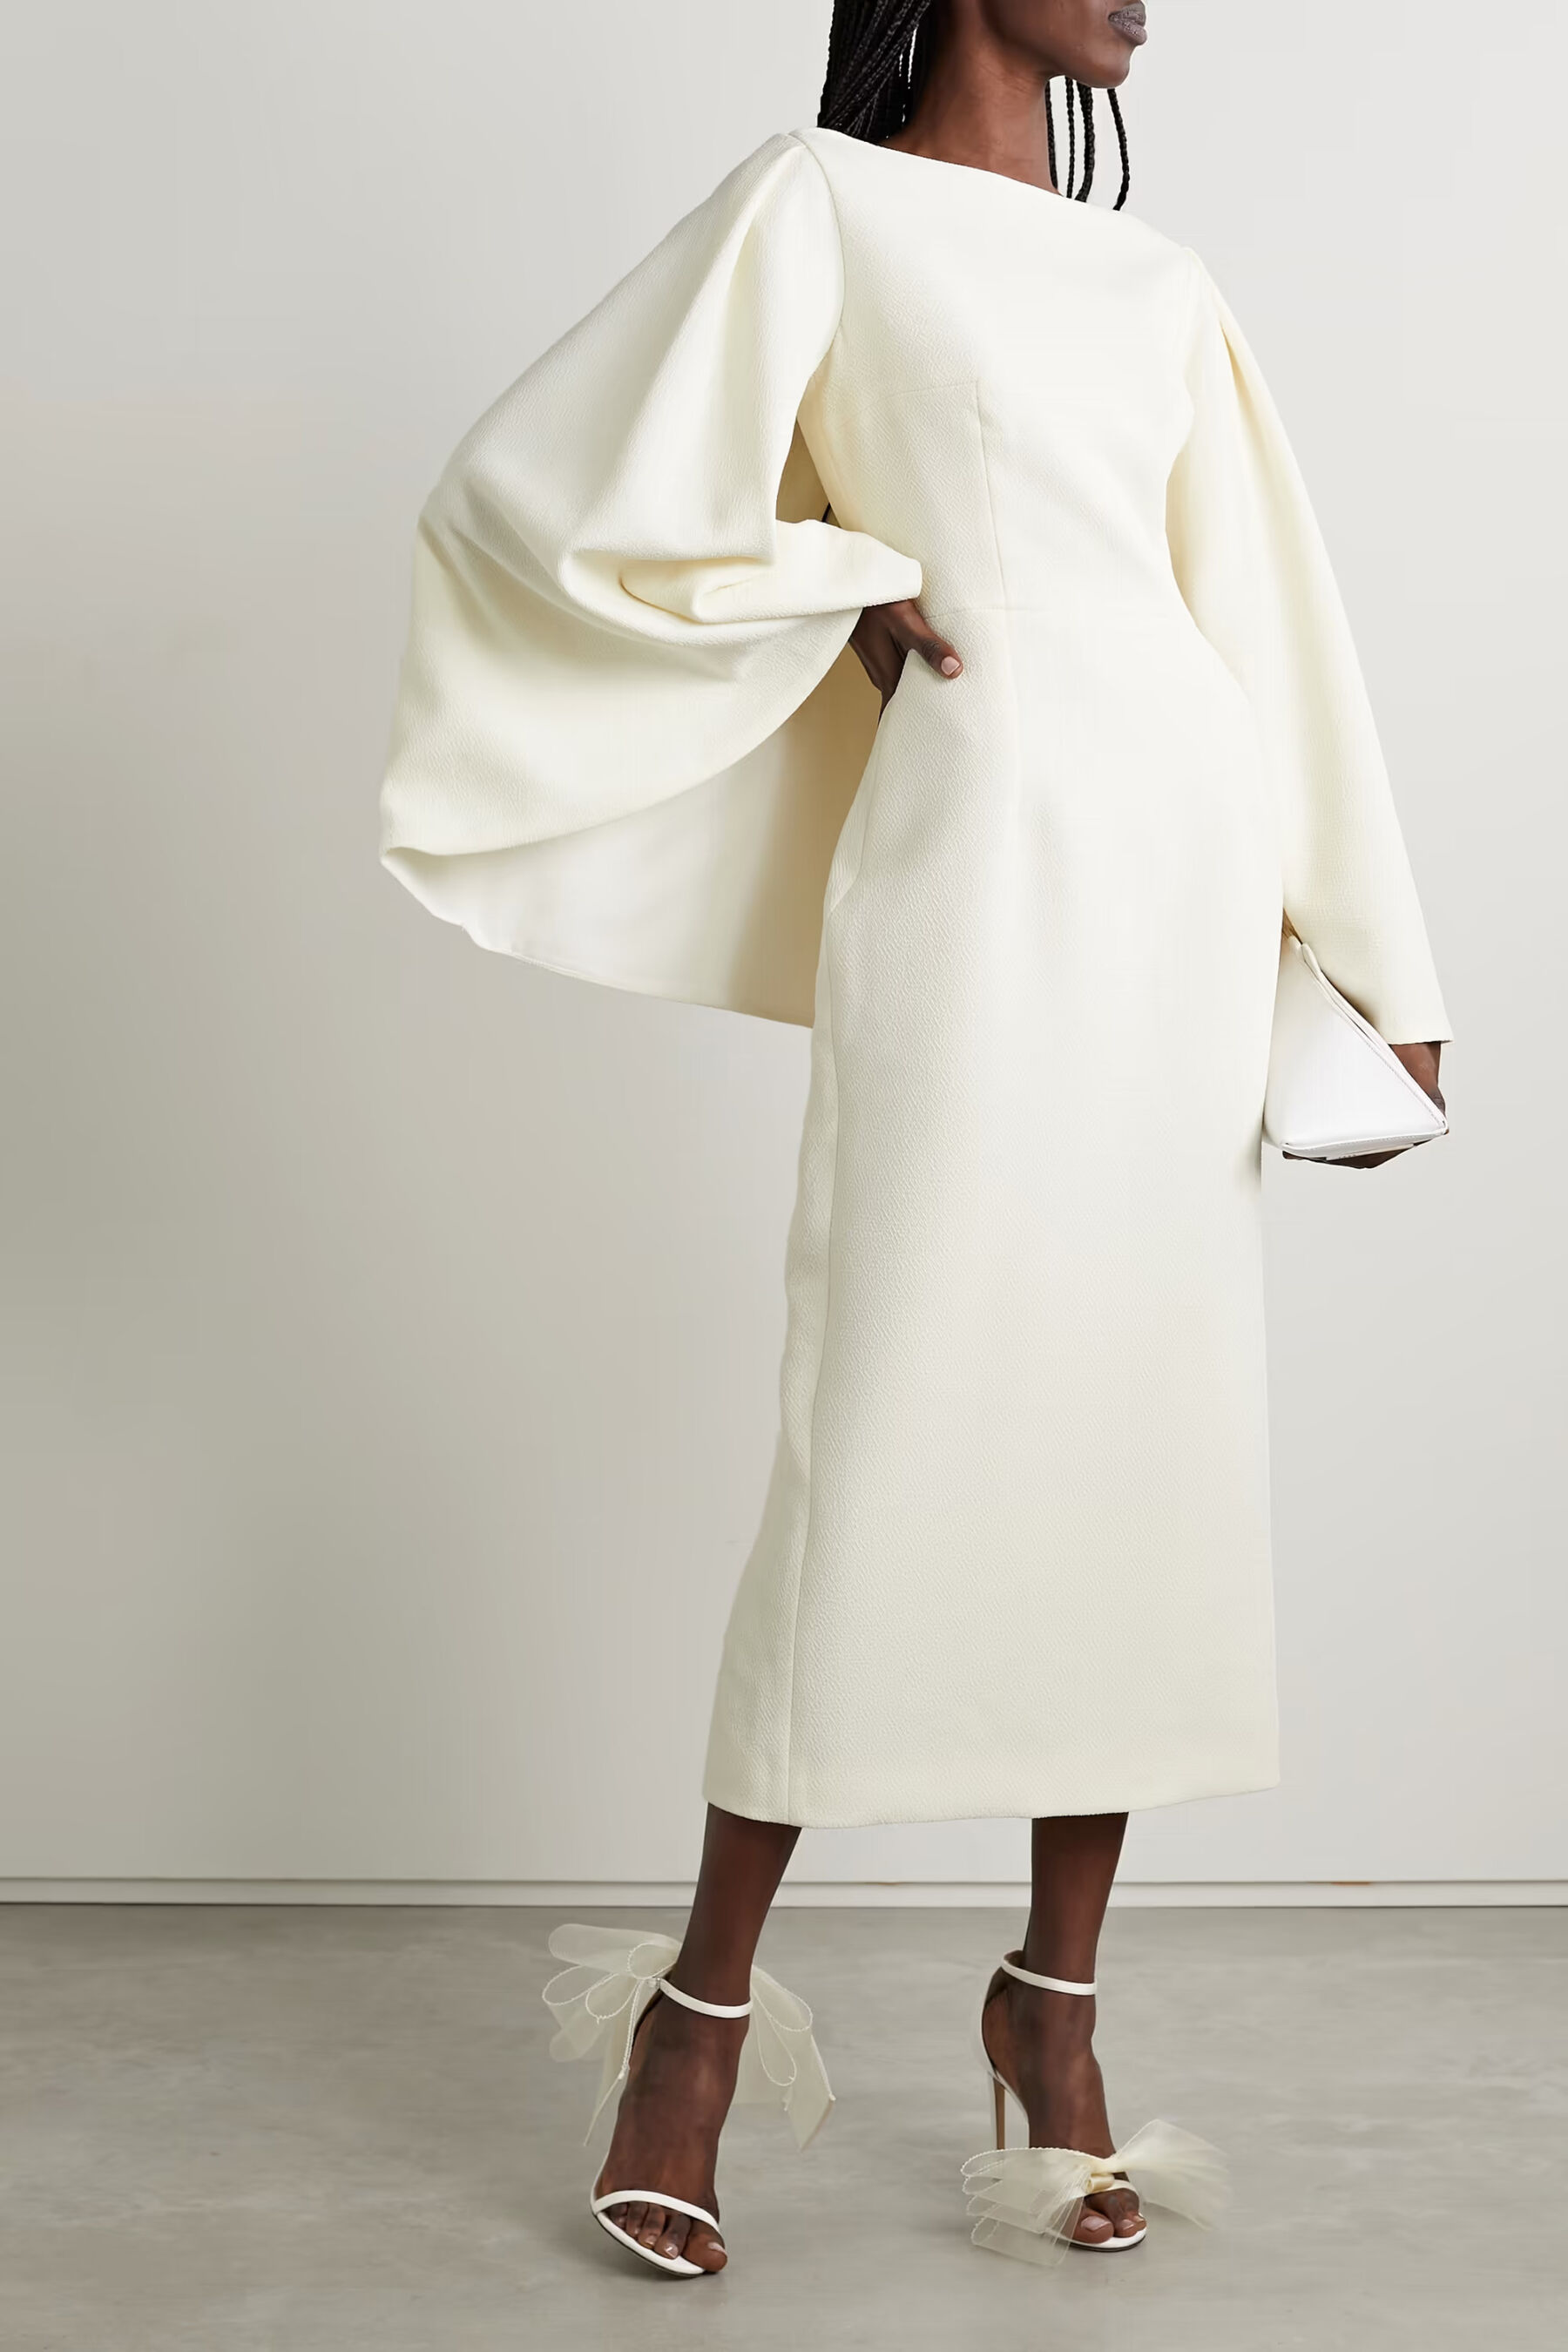 Emilia Wickstead Switzy cape-effect cloqué midi dress